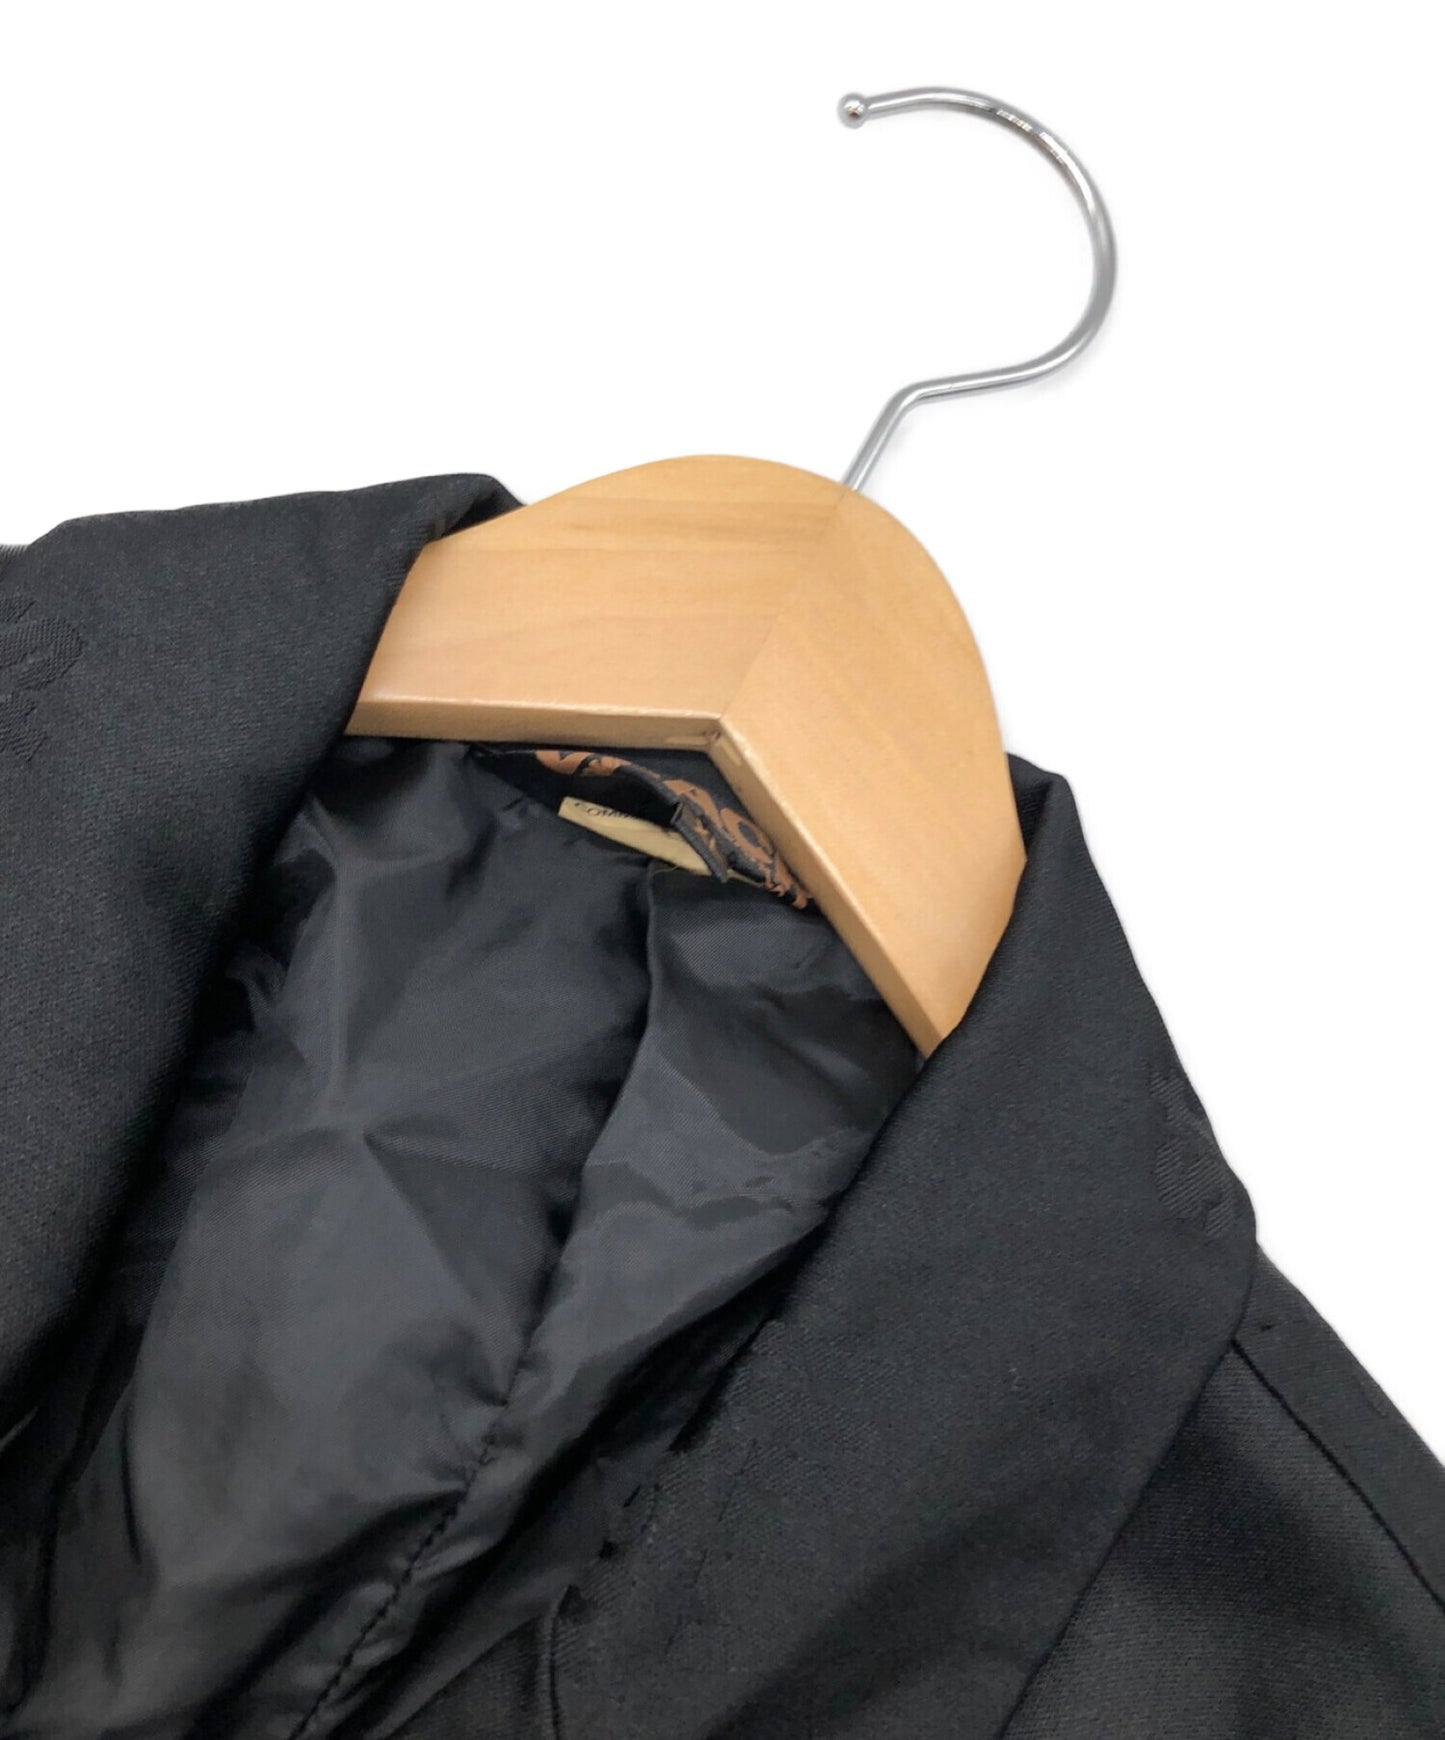 Black Comme des Garcons Jacquard Polyester Jacket 1D-J021-052-1-6